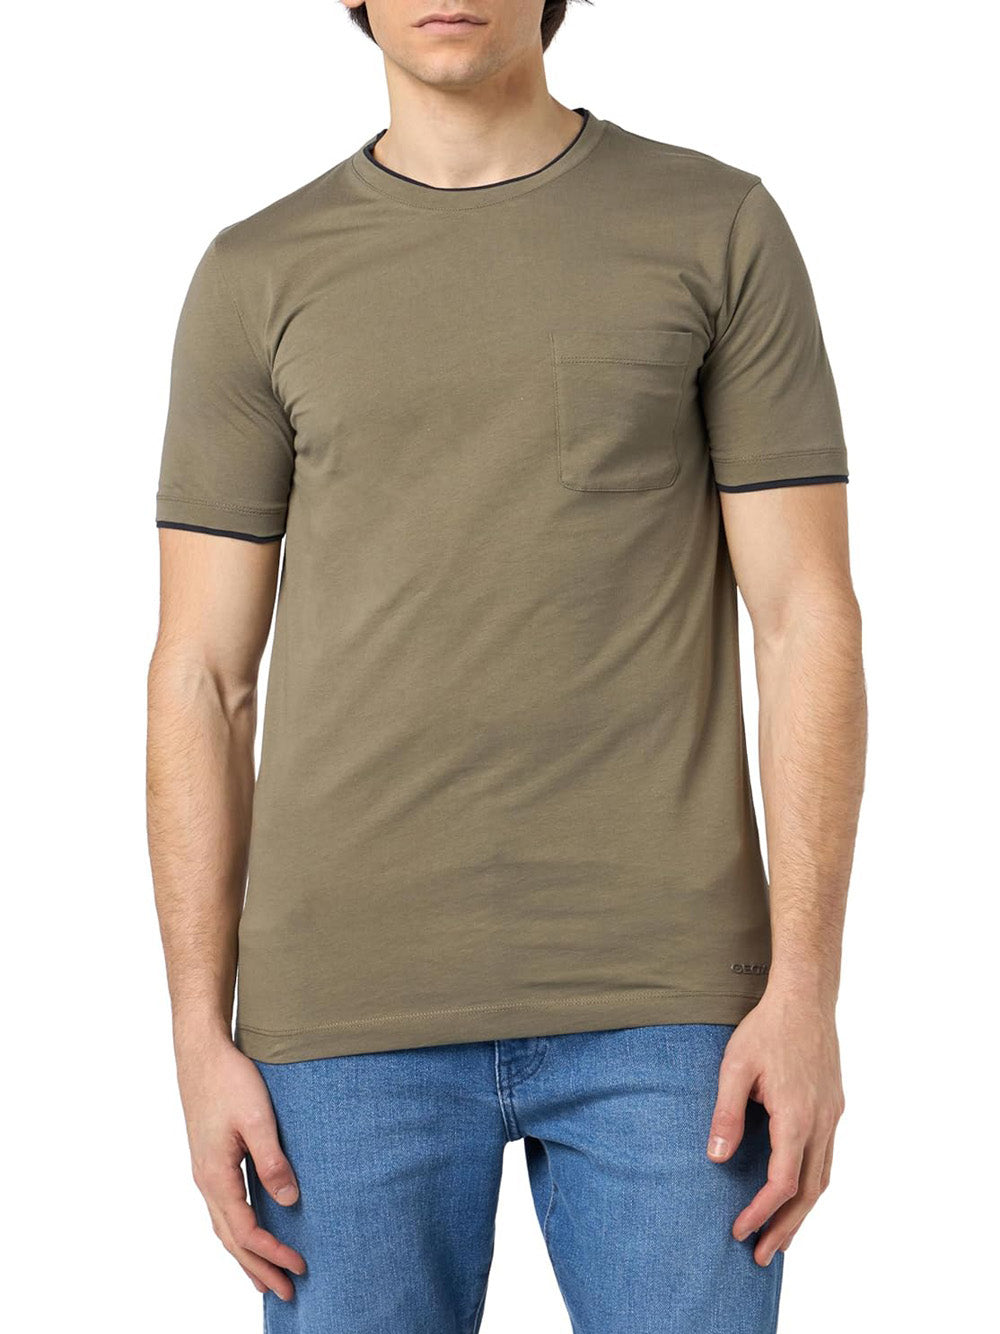 GEOX T-shirt Uomo - Verde modello M4510D T3091